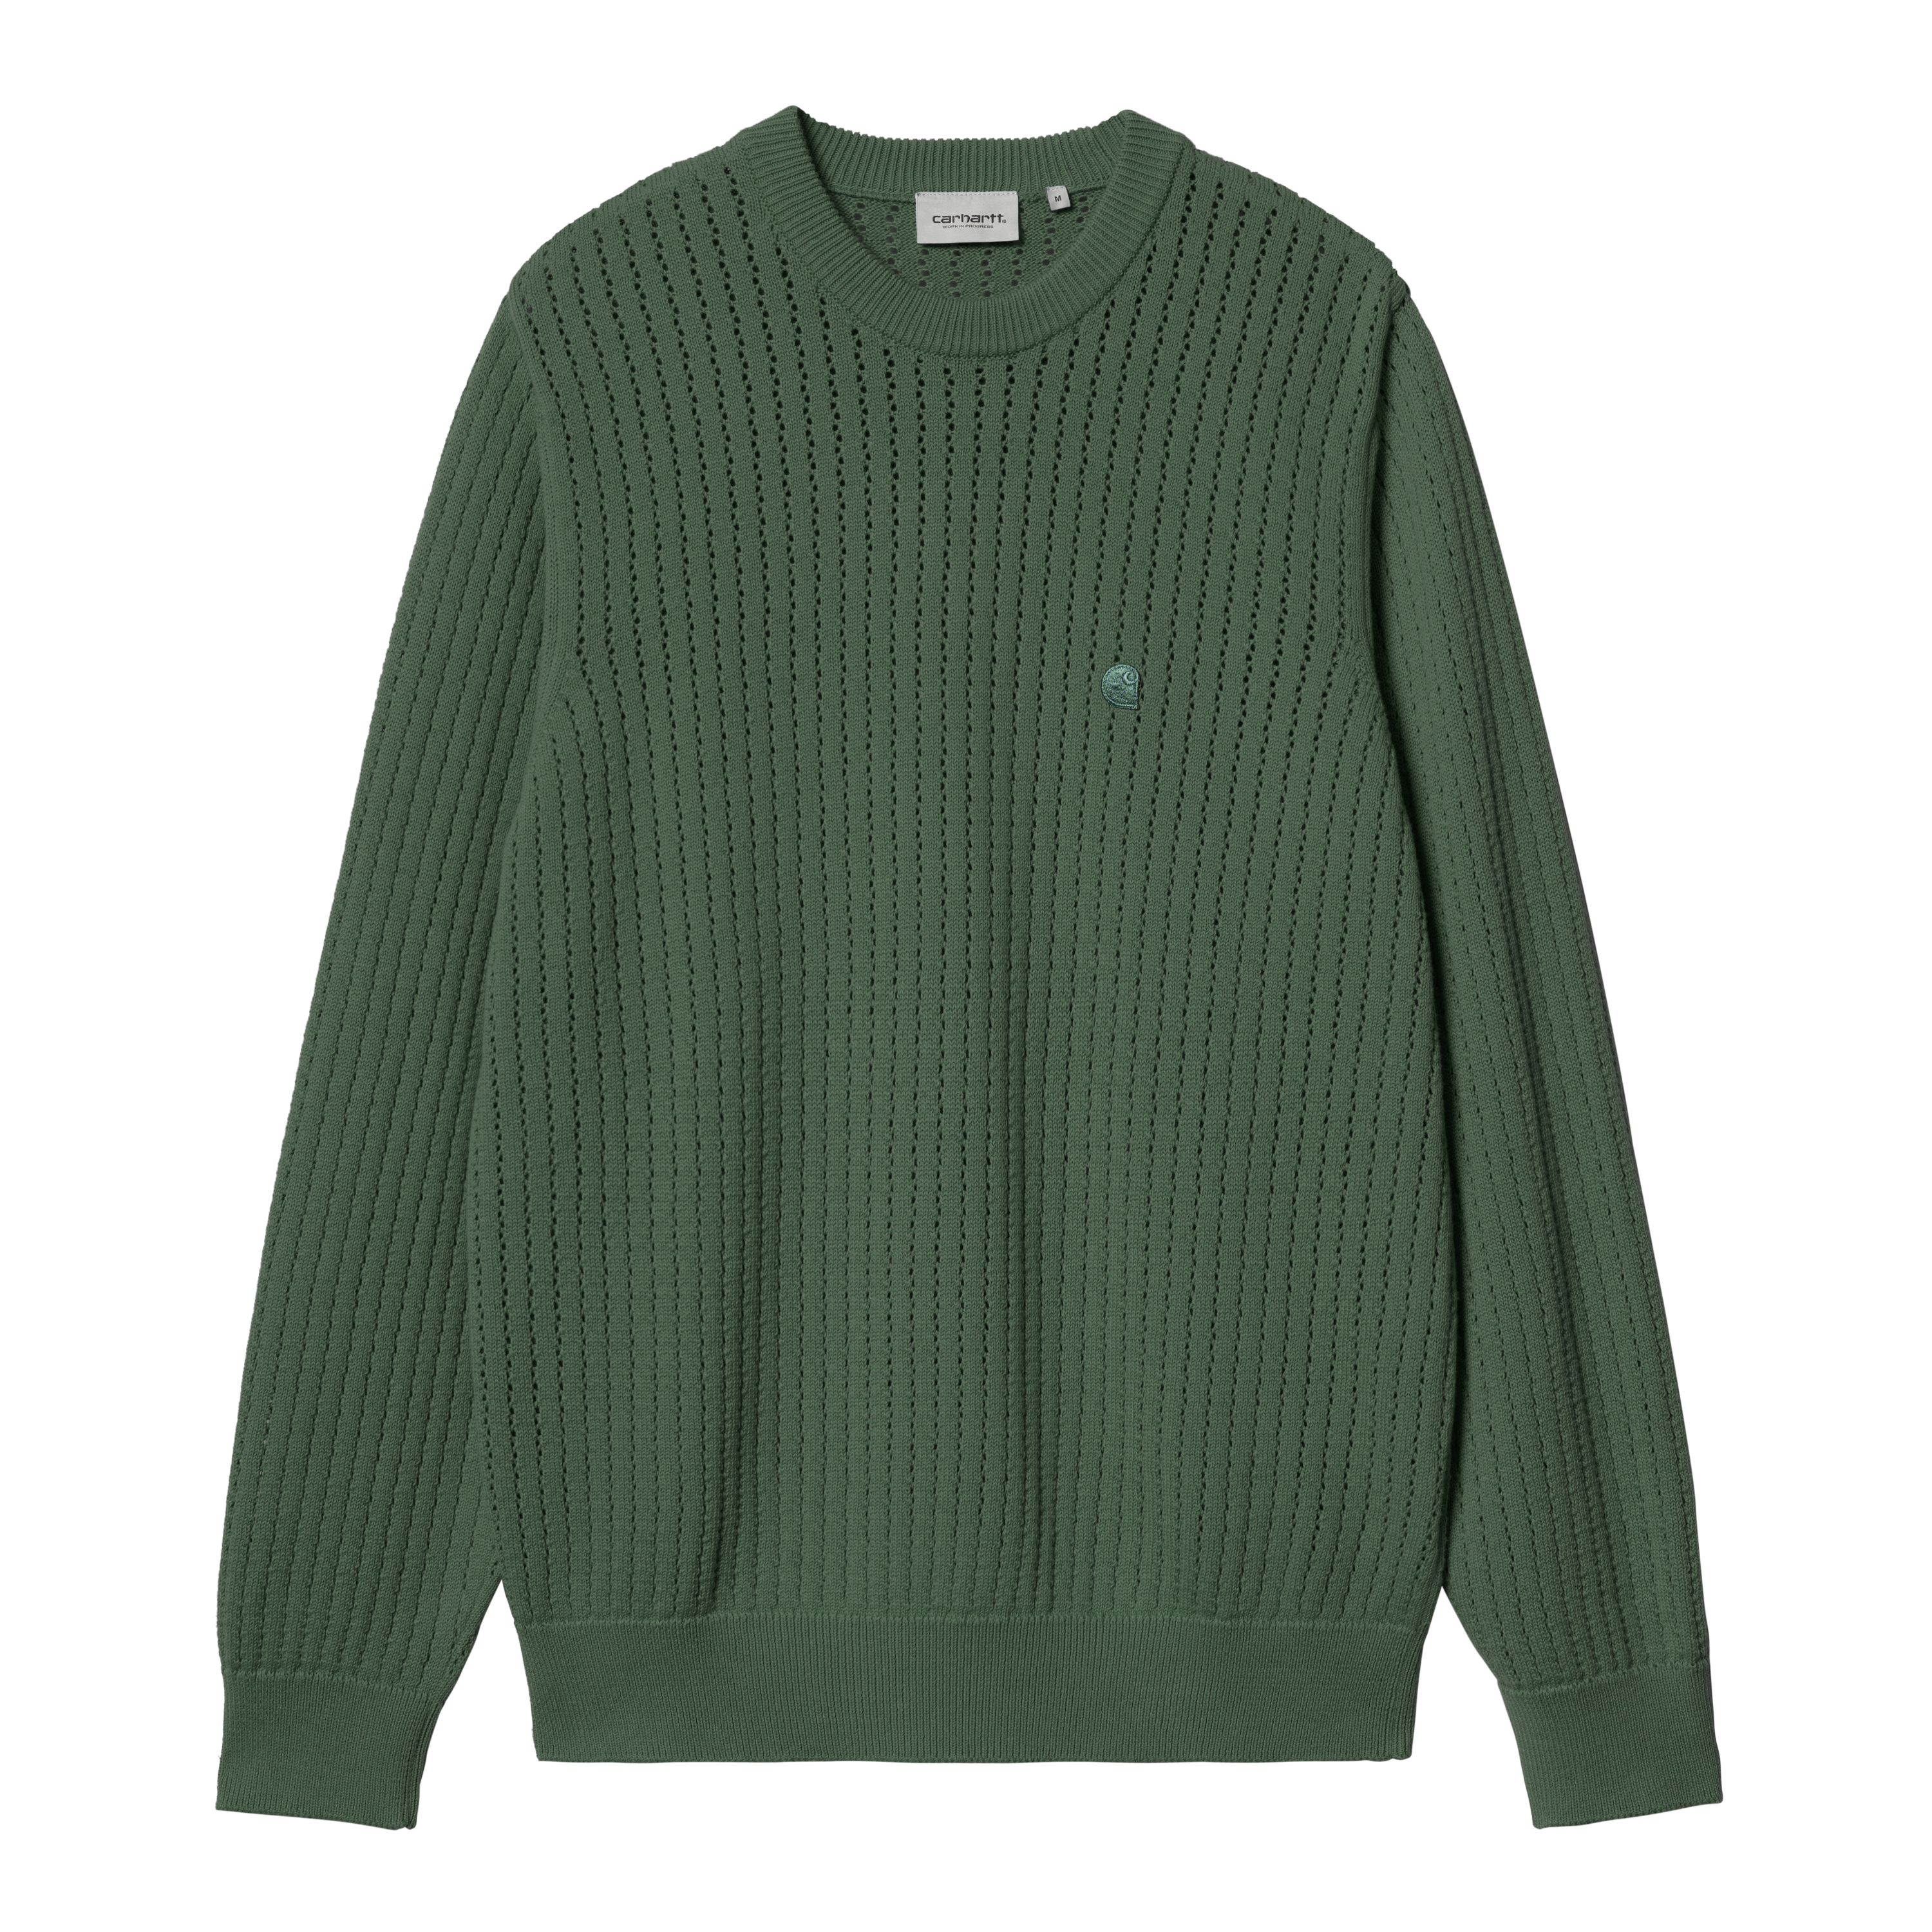 Carhartt WIP Calen Sweater in Green